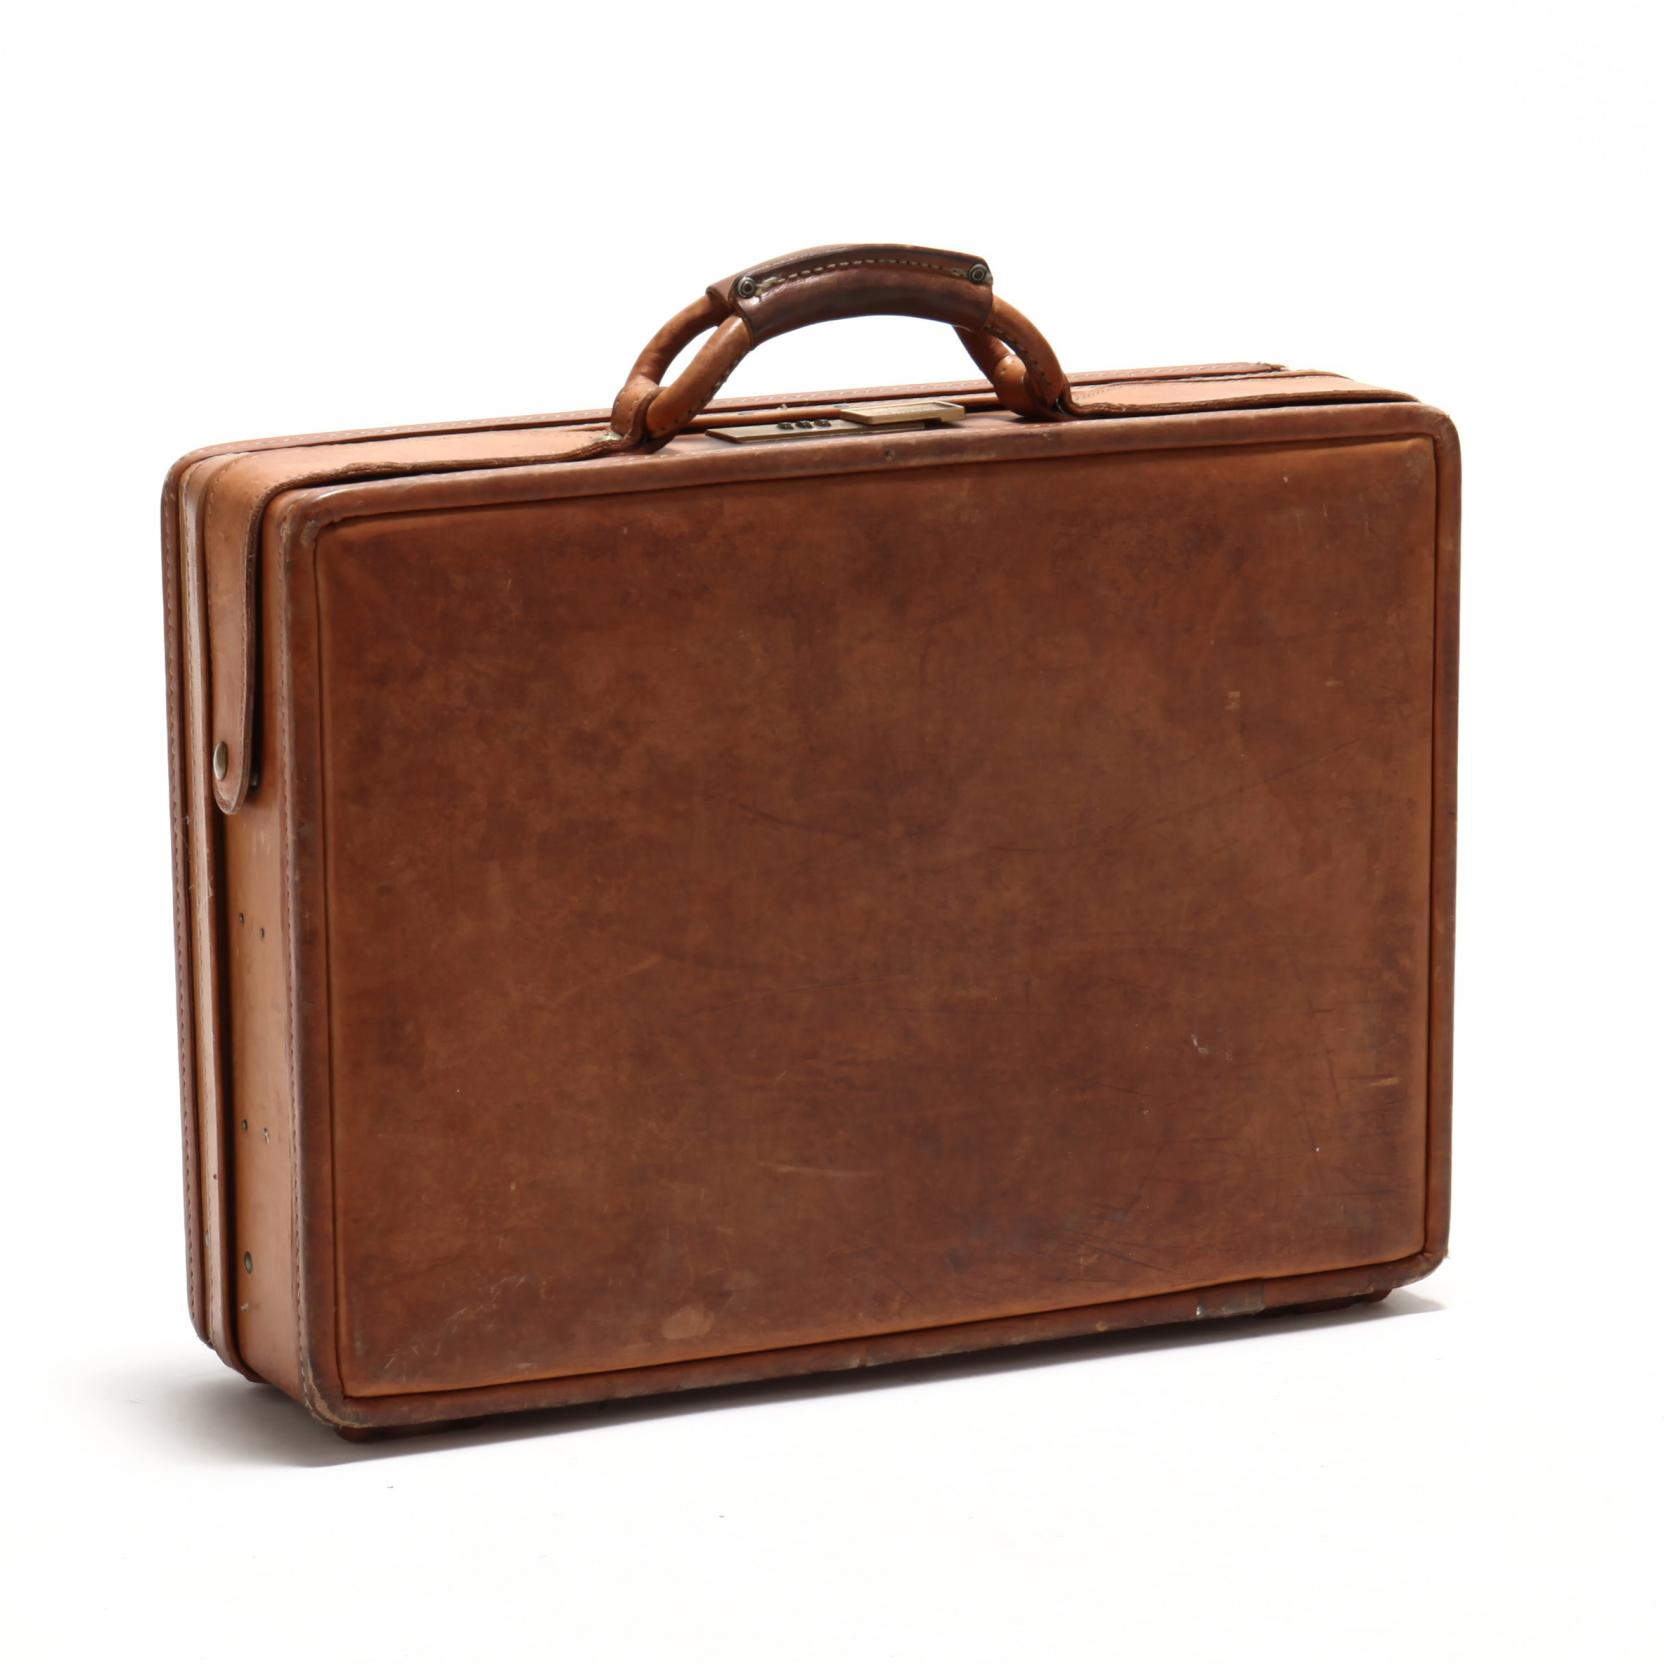 Vintage hartmann brown leather - Gem